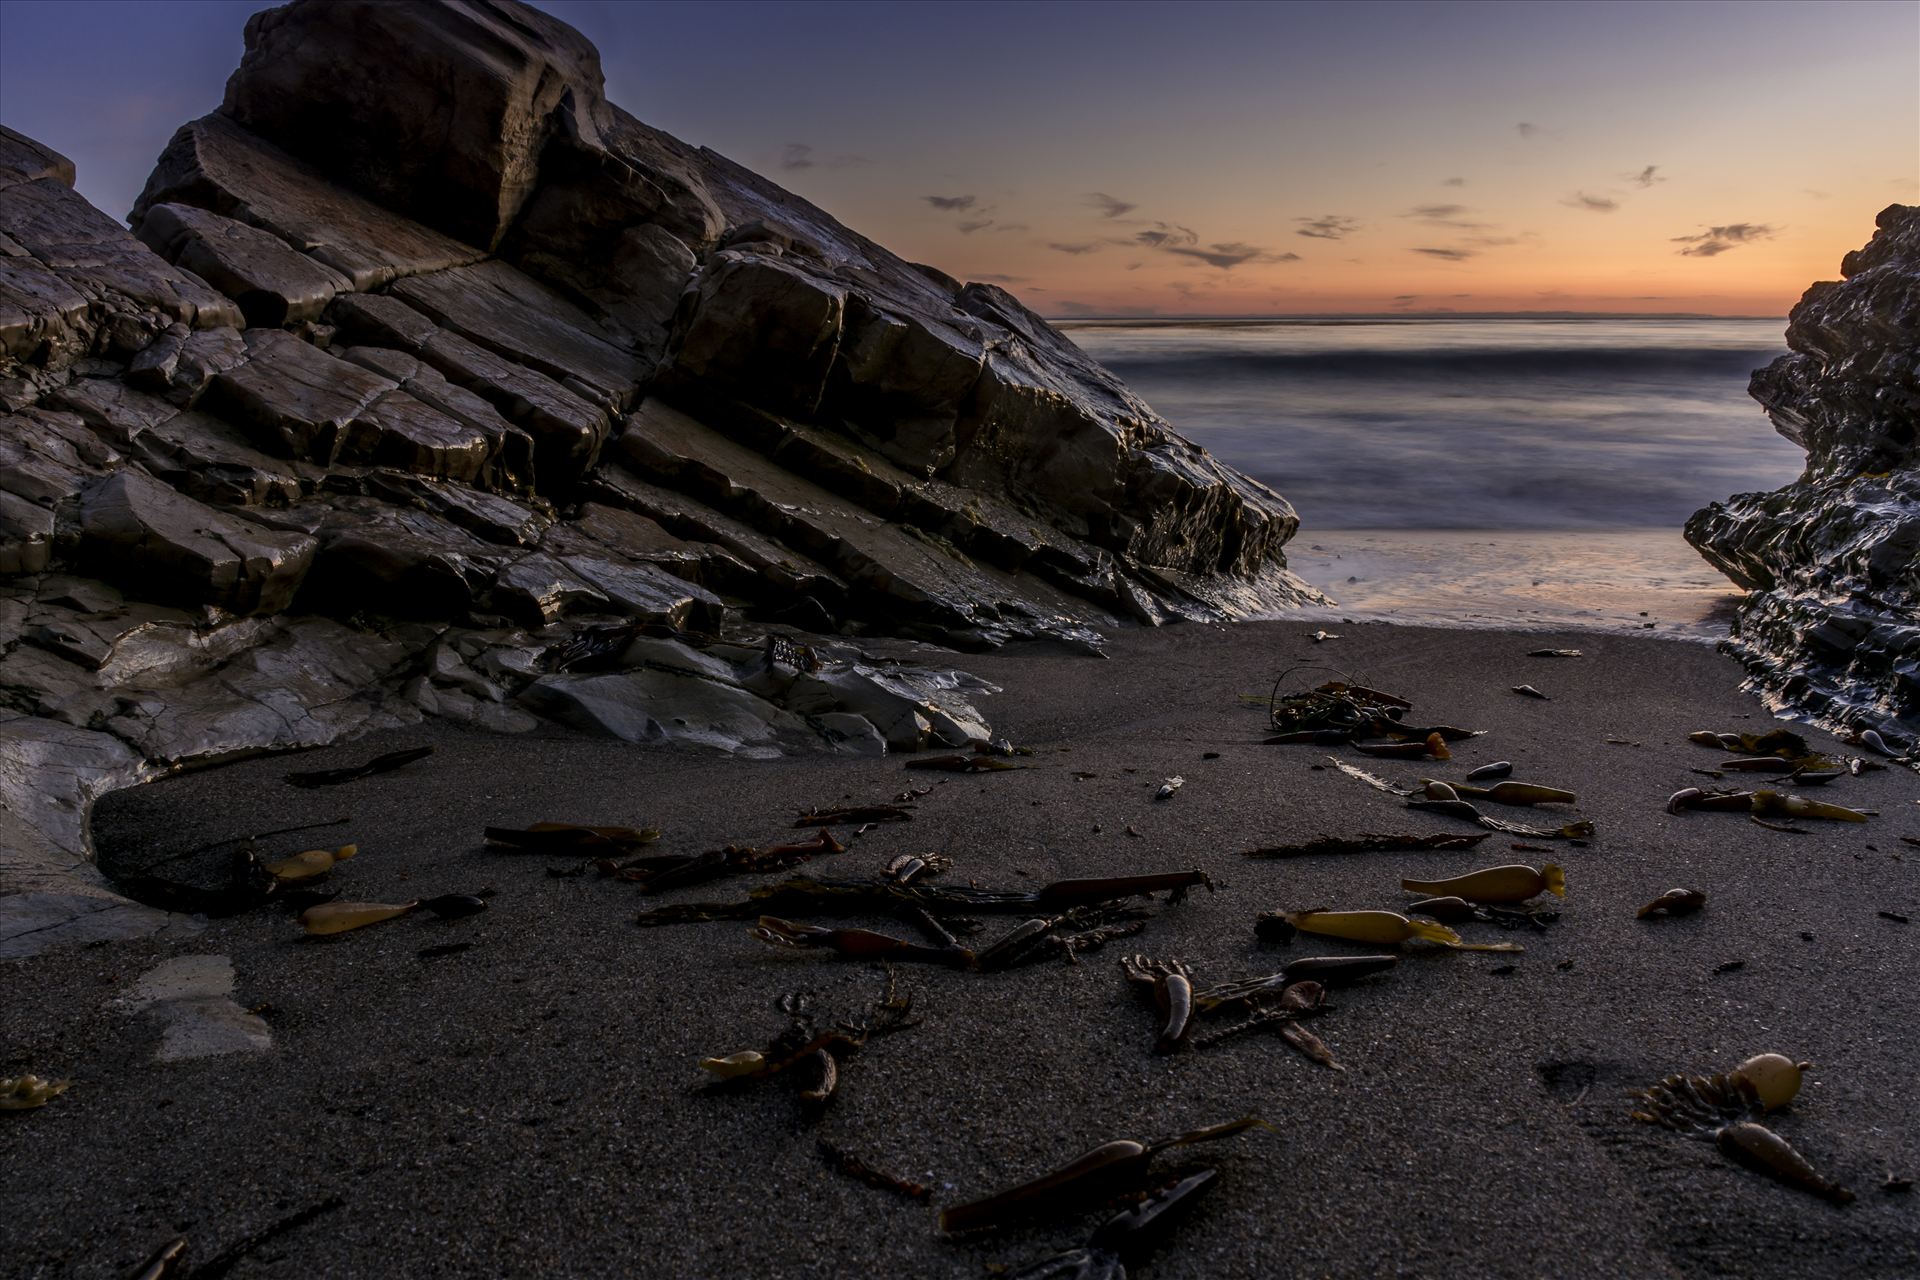 Wet Sand Sunset.jpg  by Sarah Williams